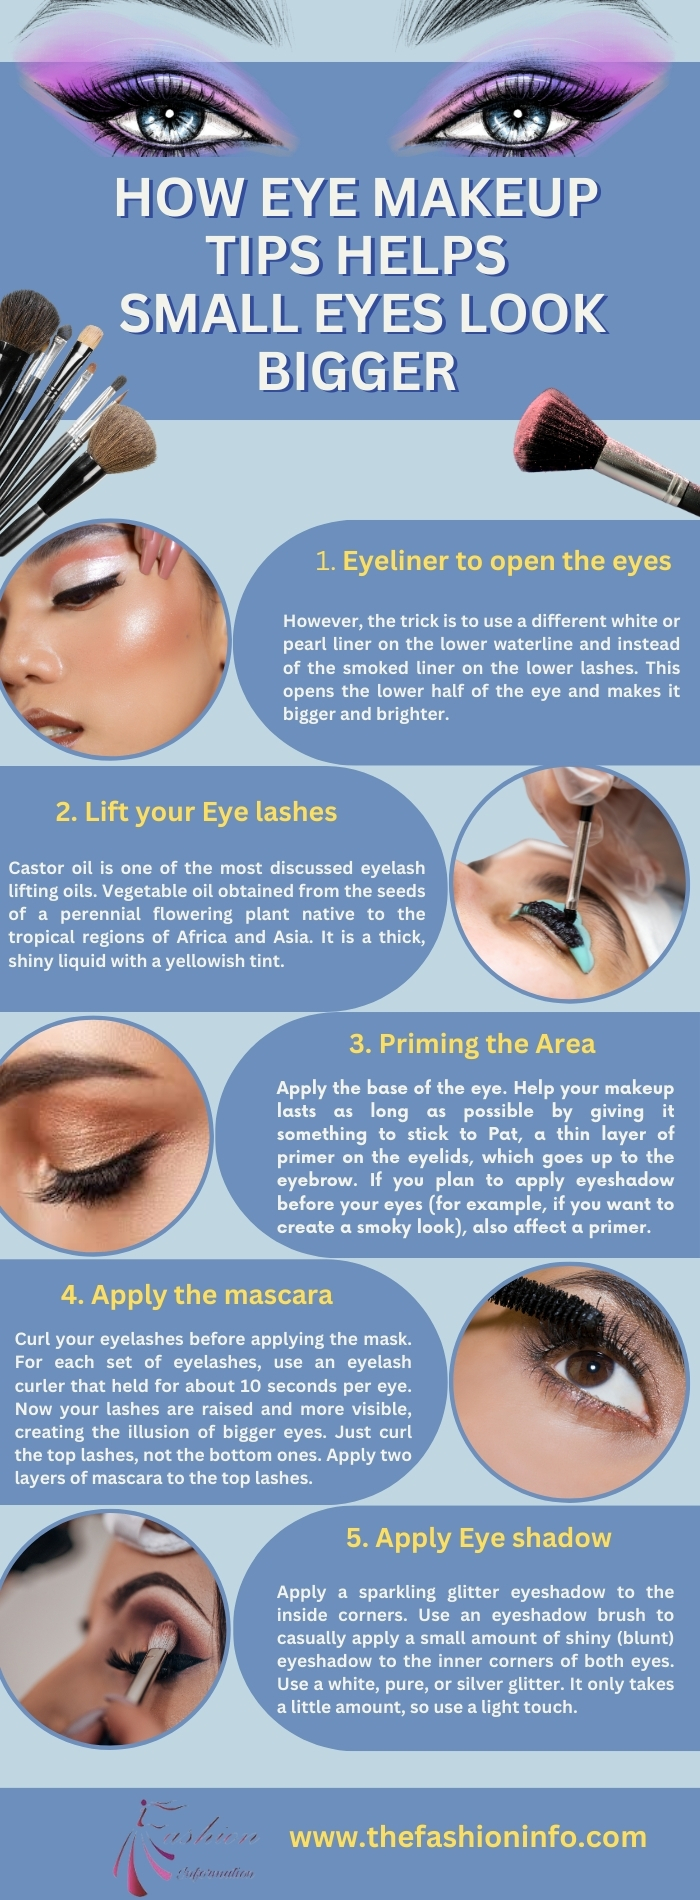 How eye makeup tips helps small eyes look bigger